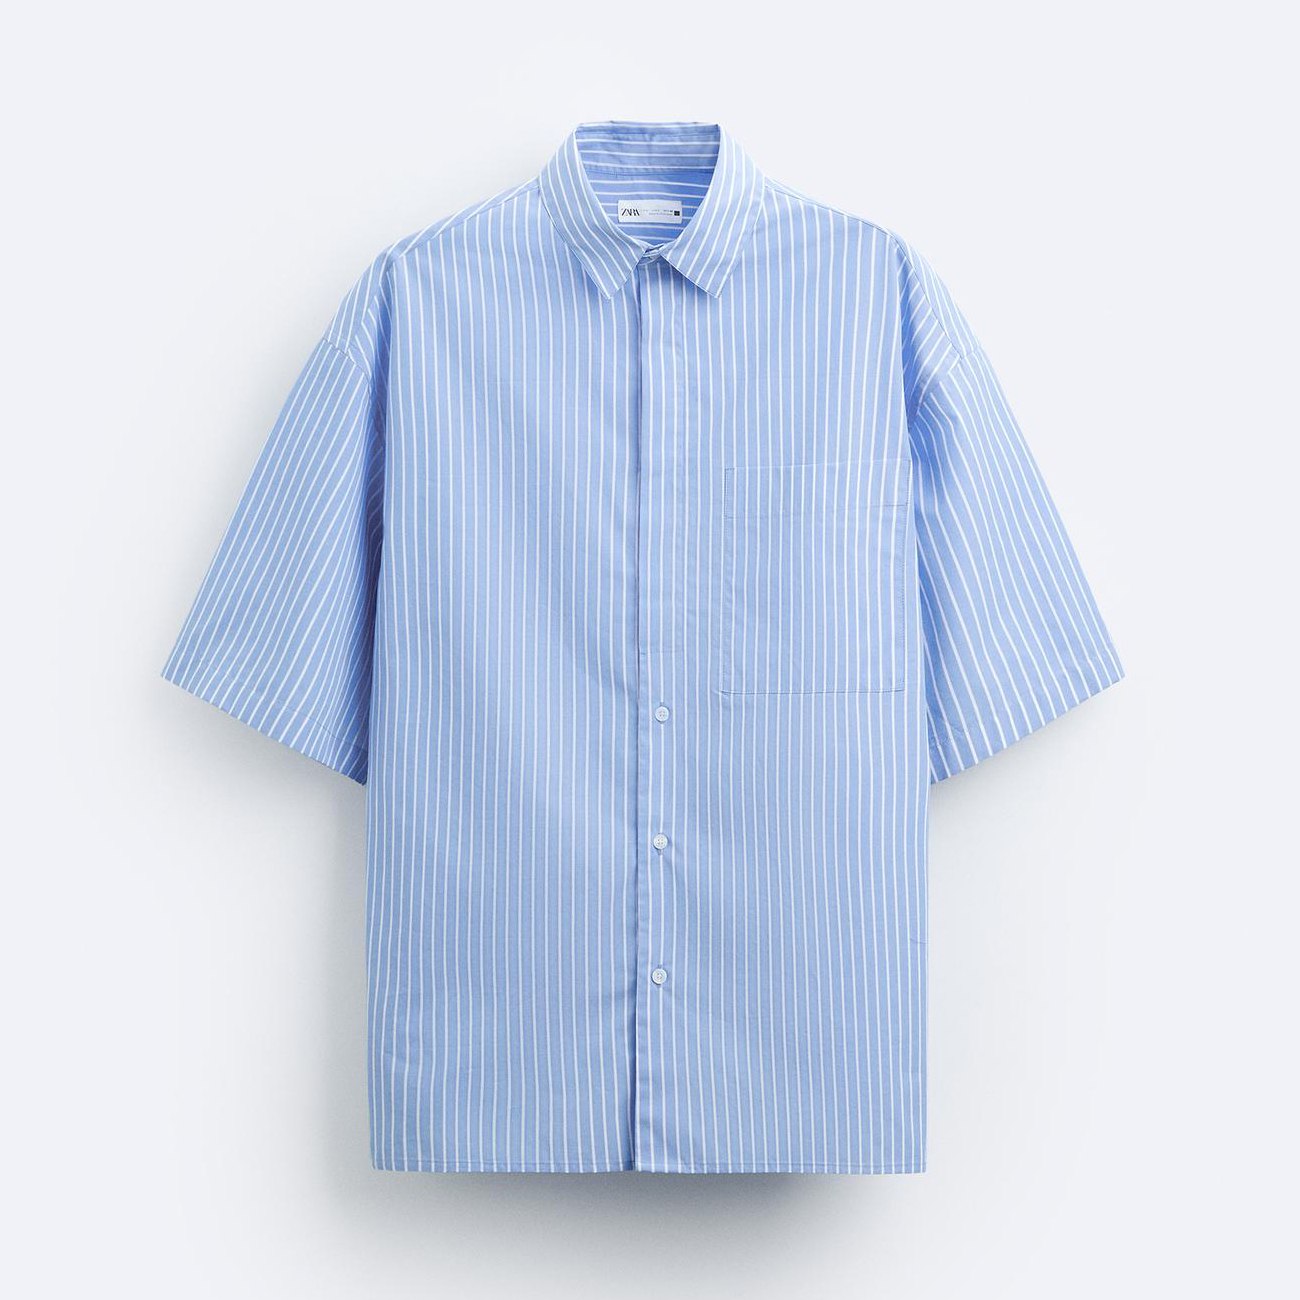 Рубашка Zara Striped Oversize, светло-голубой рубашка zara cropped striped голубой белый